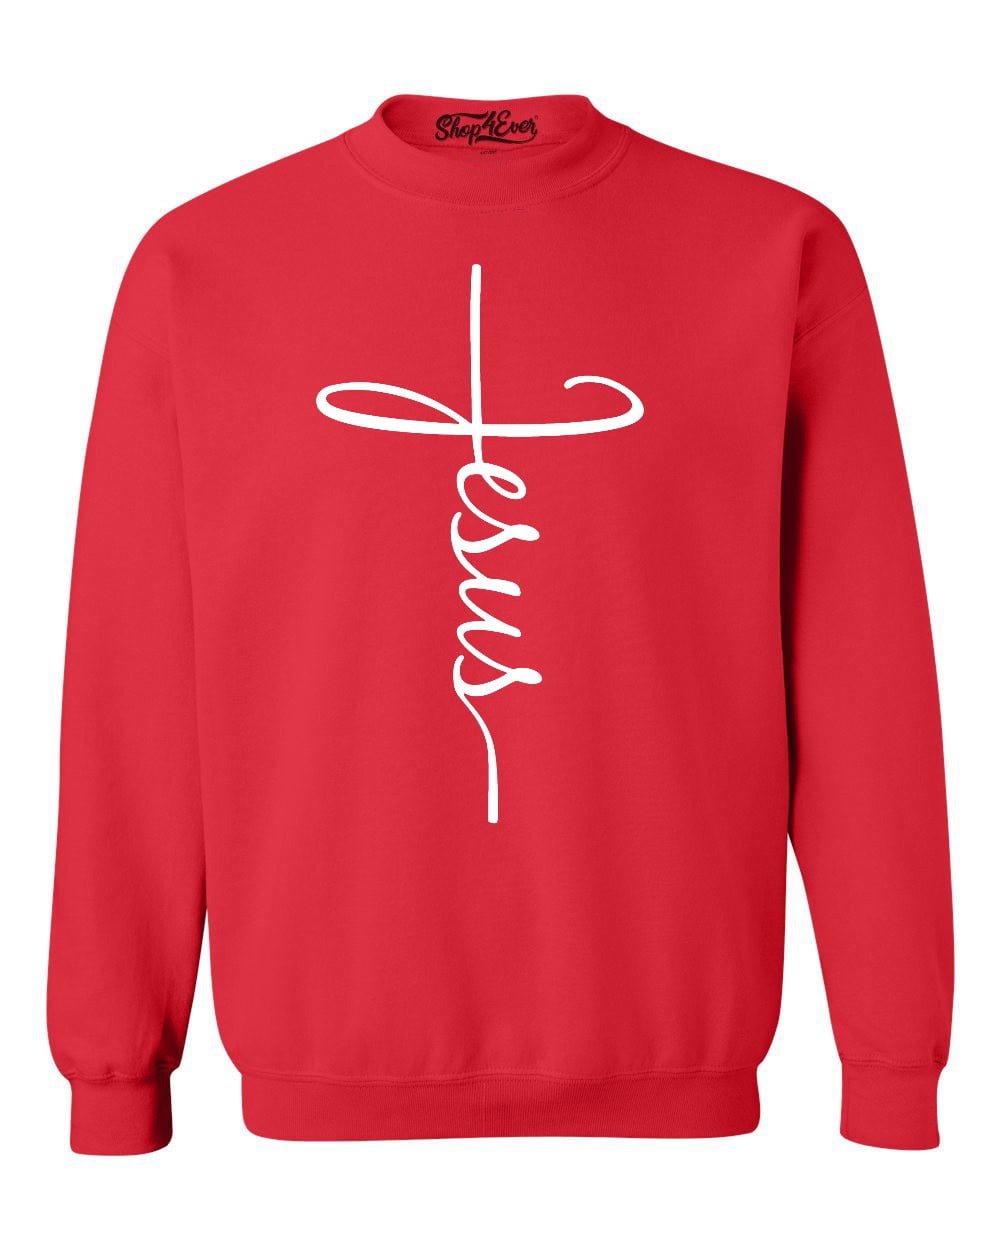 Shop4Ever Men's Jesus Cross Religious Crewneck Sweatshirt XX-Large Red ...